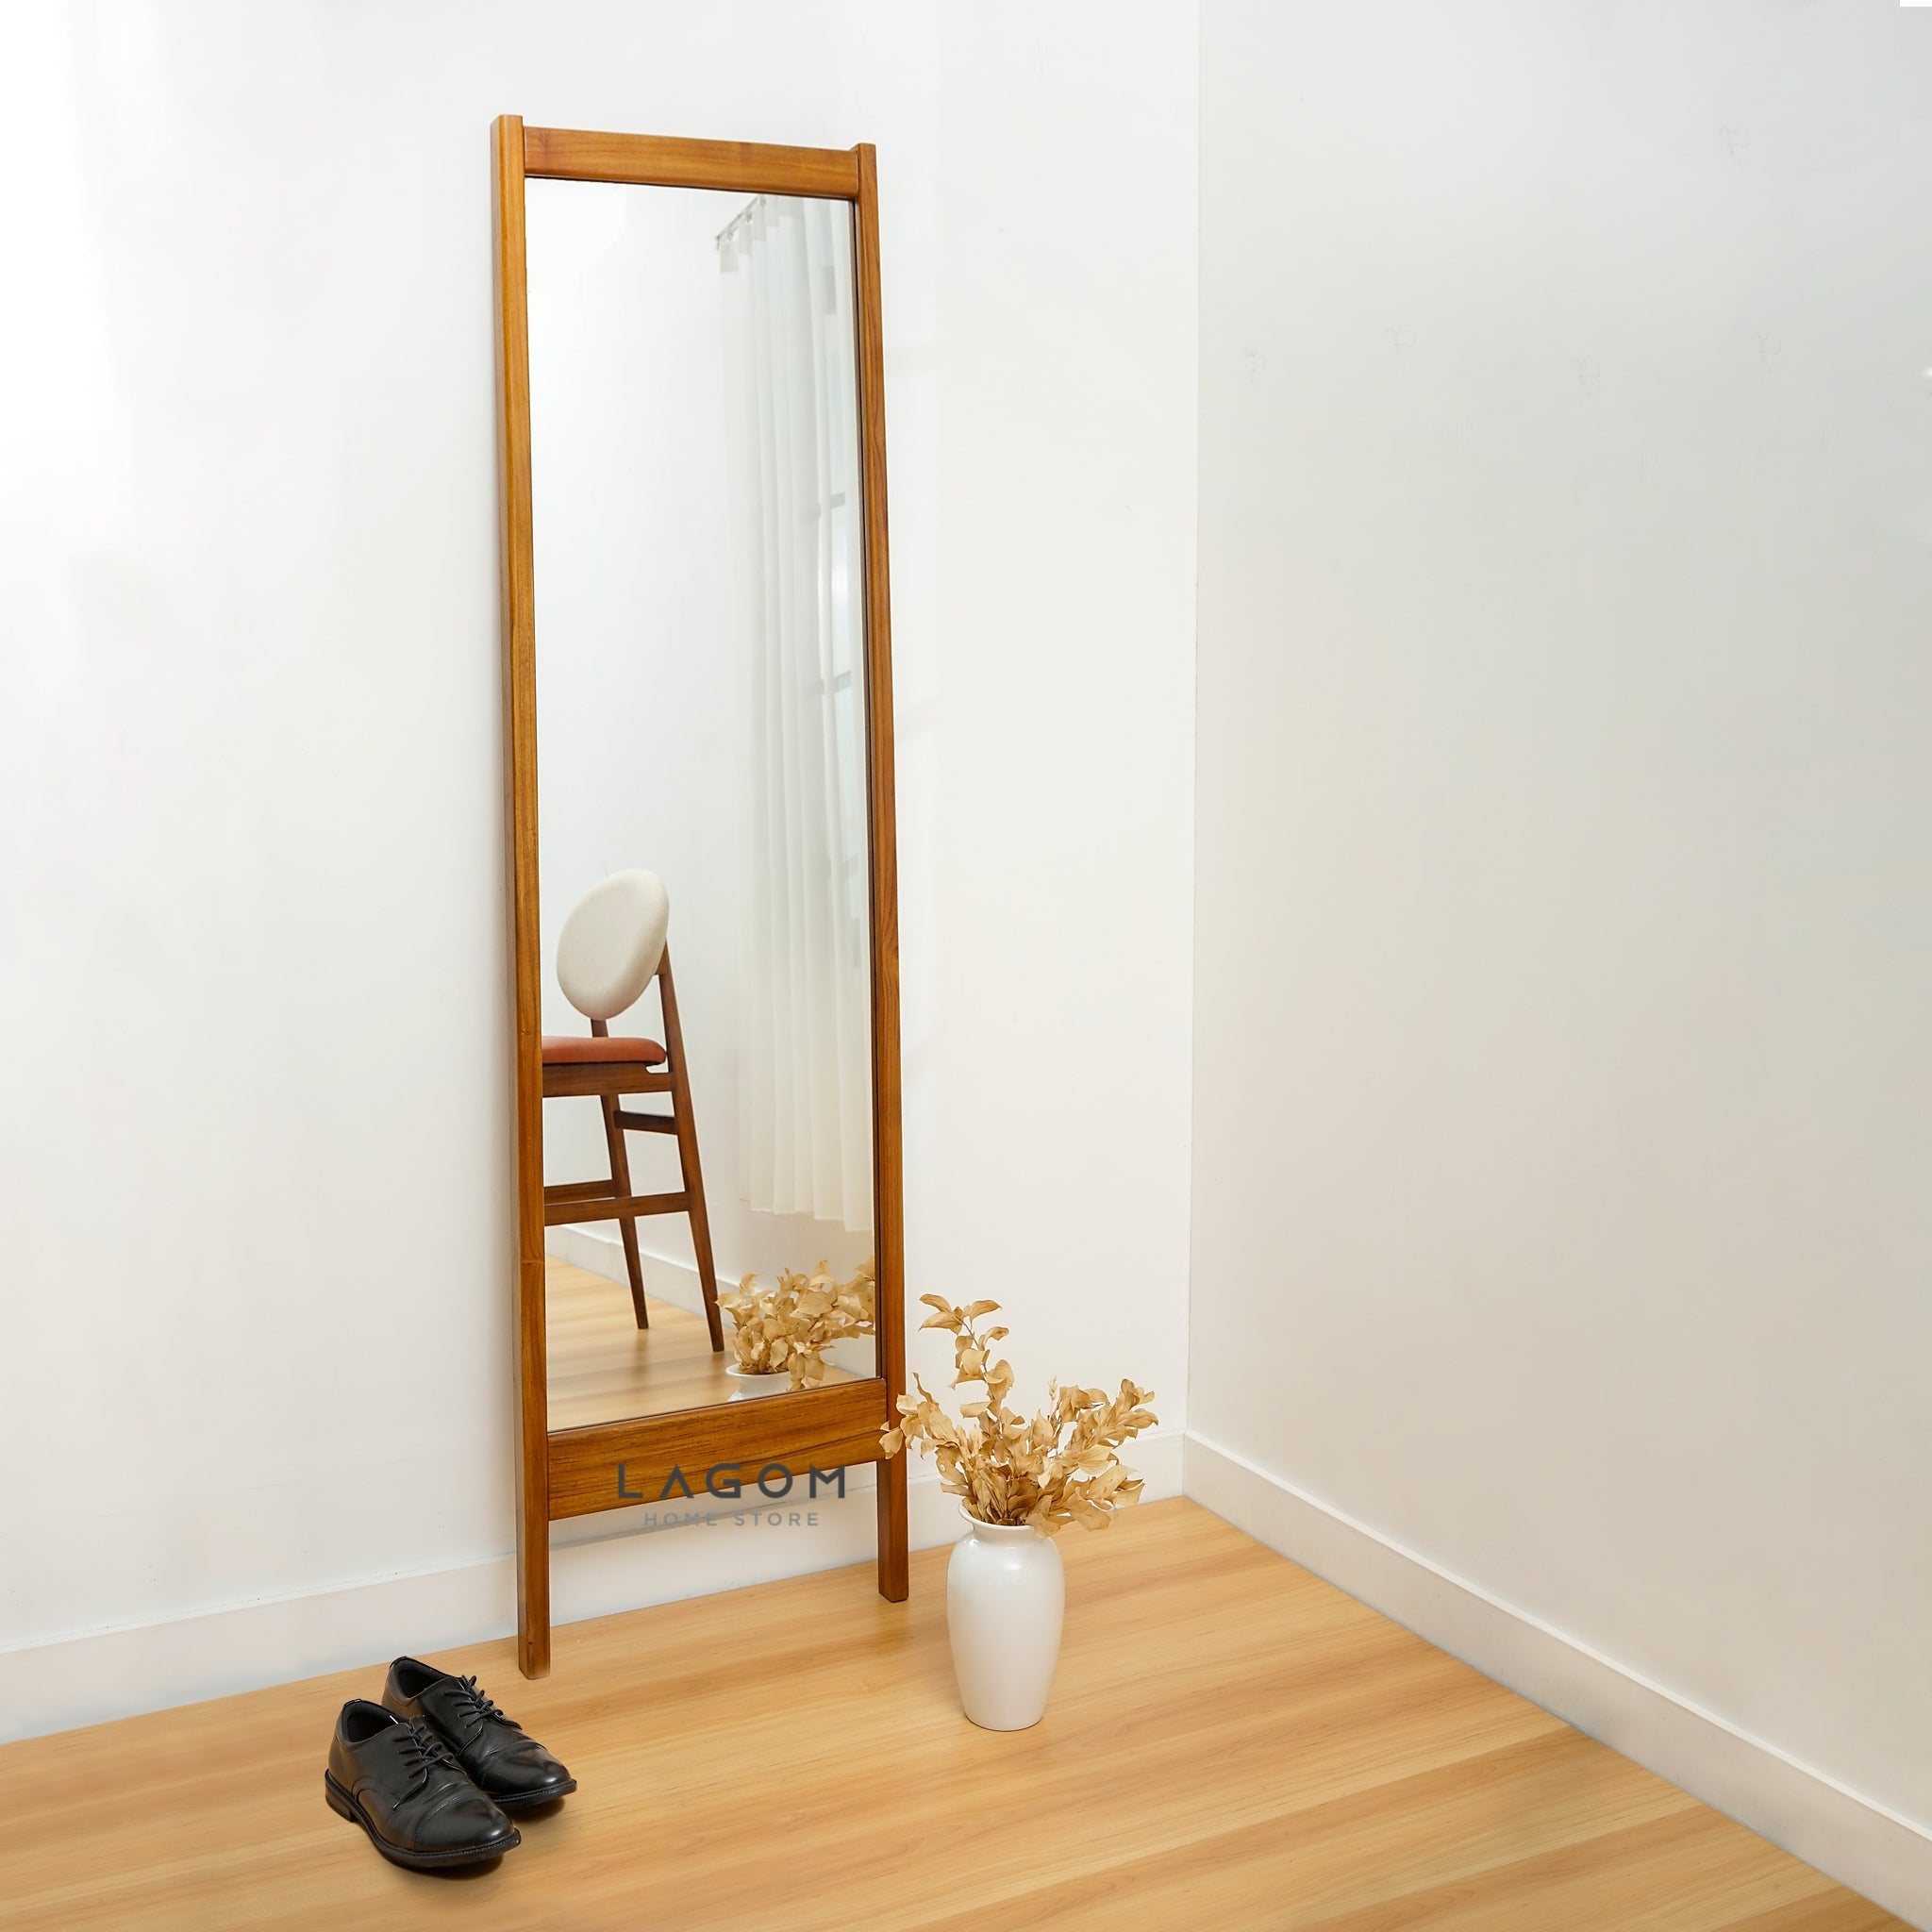 Cermin Kayu Jati Full Body Freestanding - Tinggi 183 cm Mirror Lagom Home Store Jati Furnitur Teak Furniture Jakarta